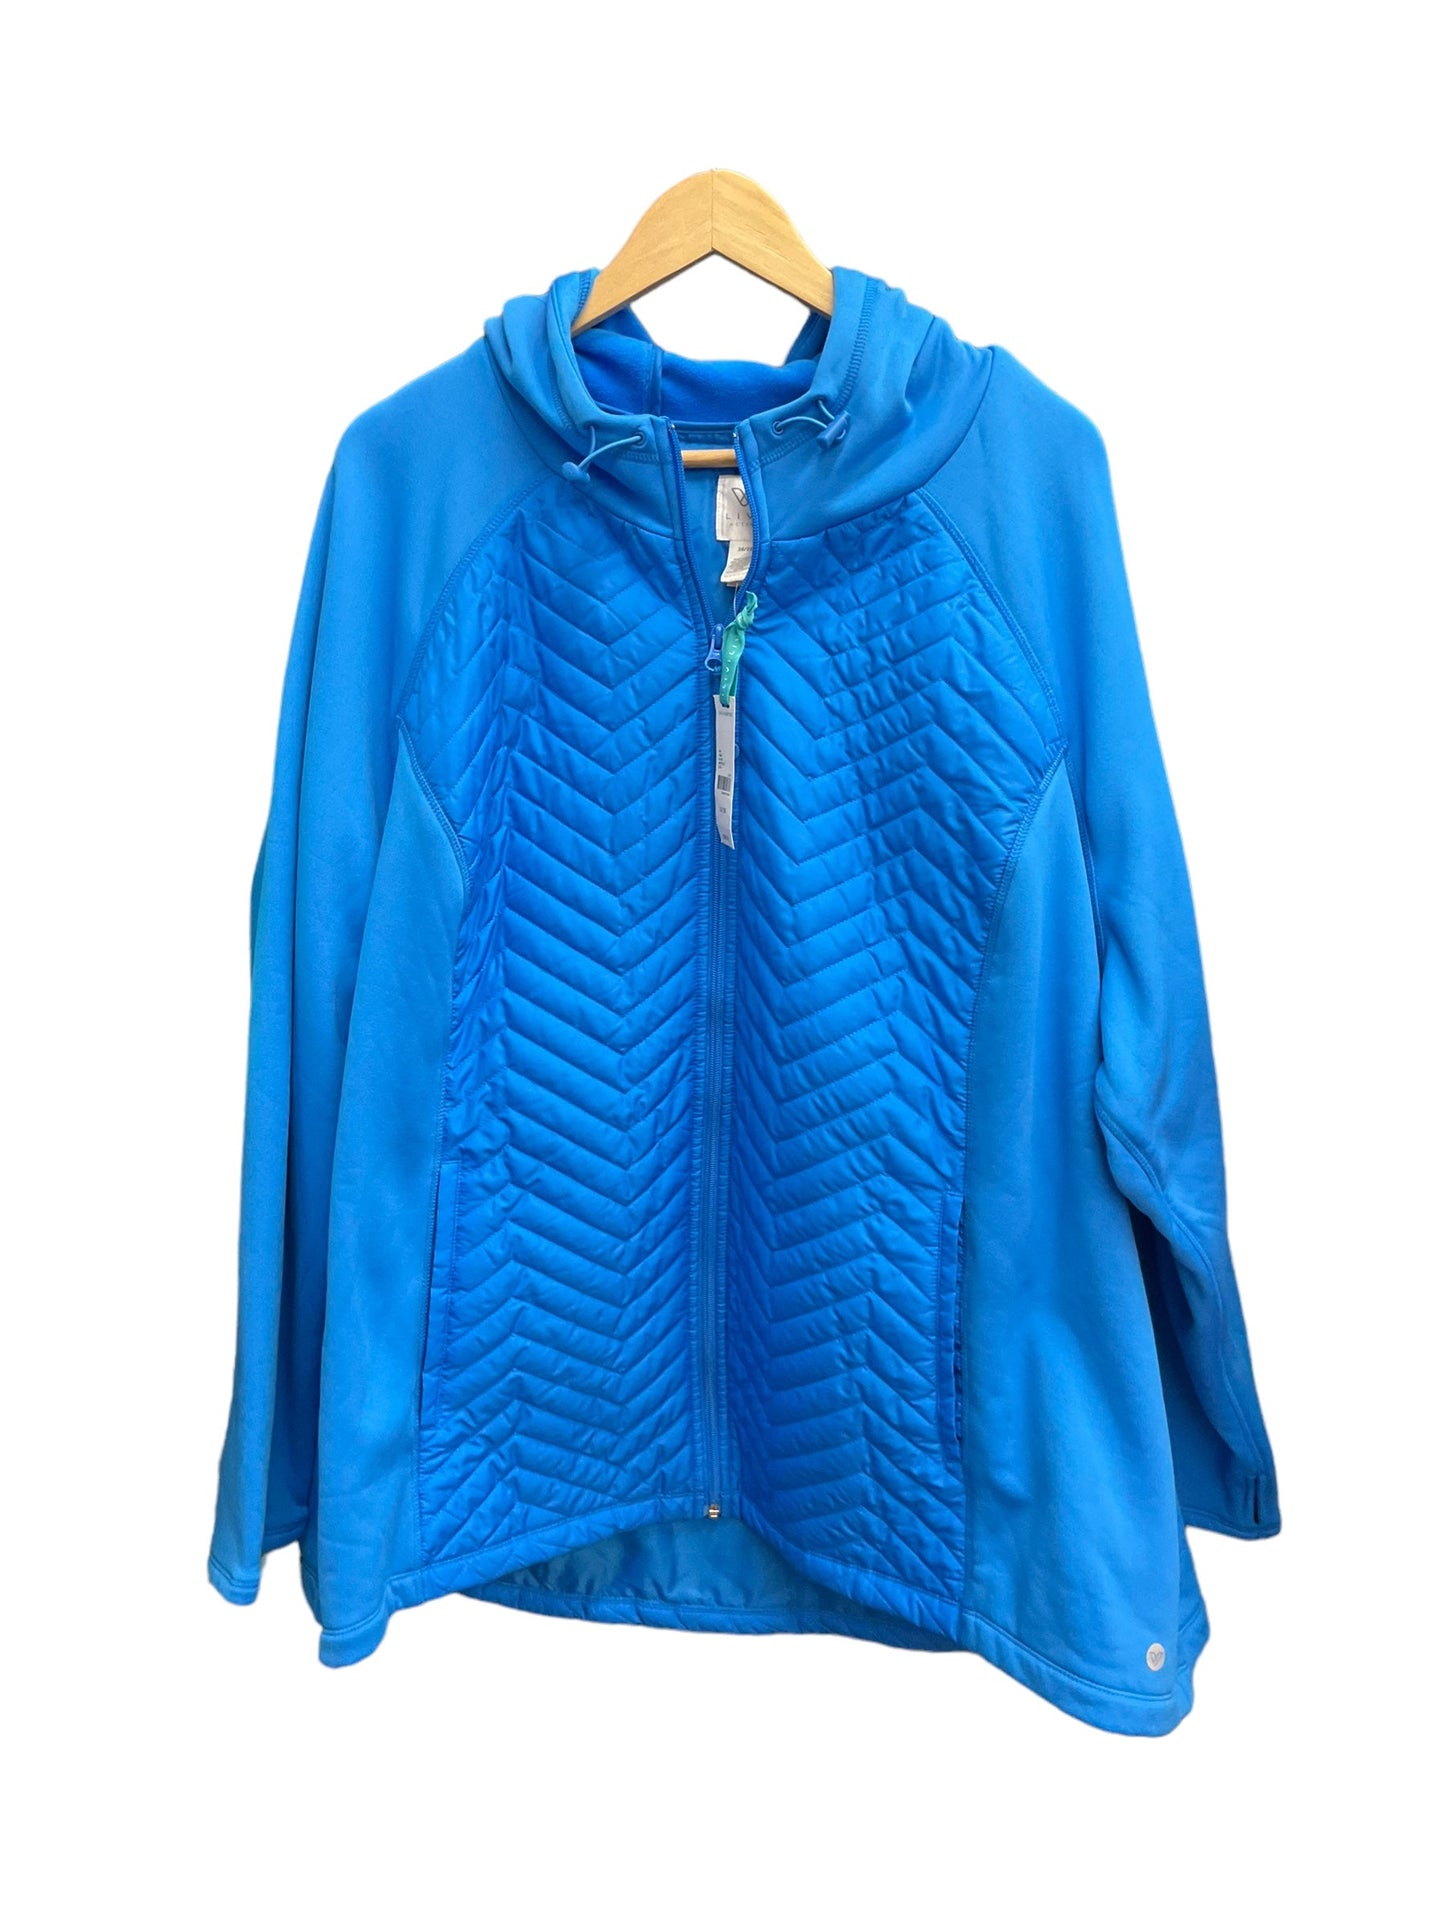 Blue Athletic Jacket Livi Active, Size 4x